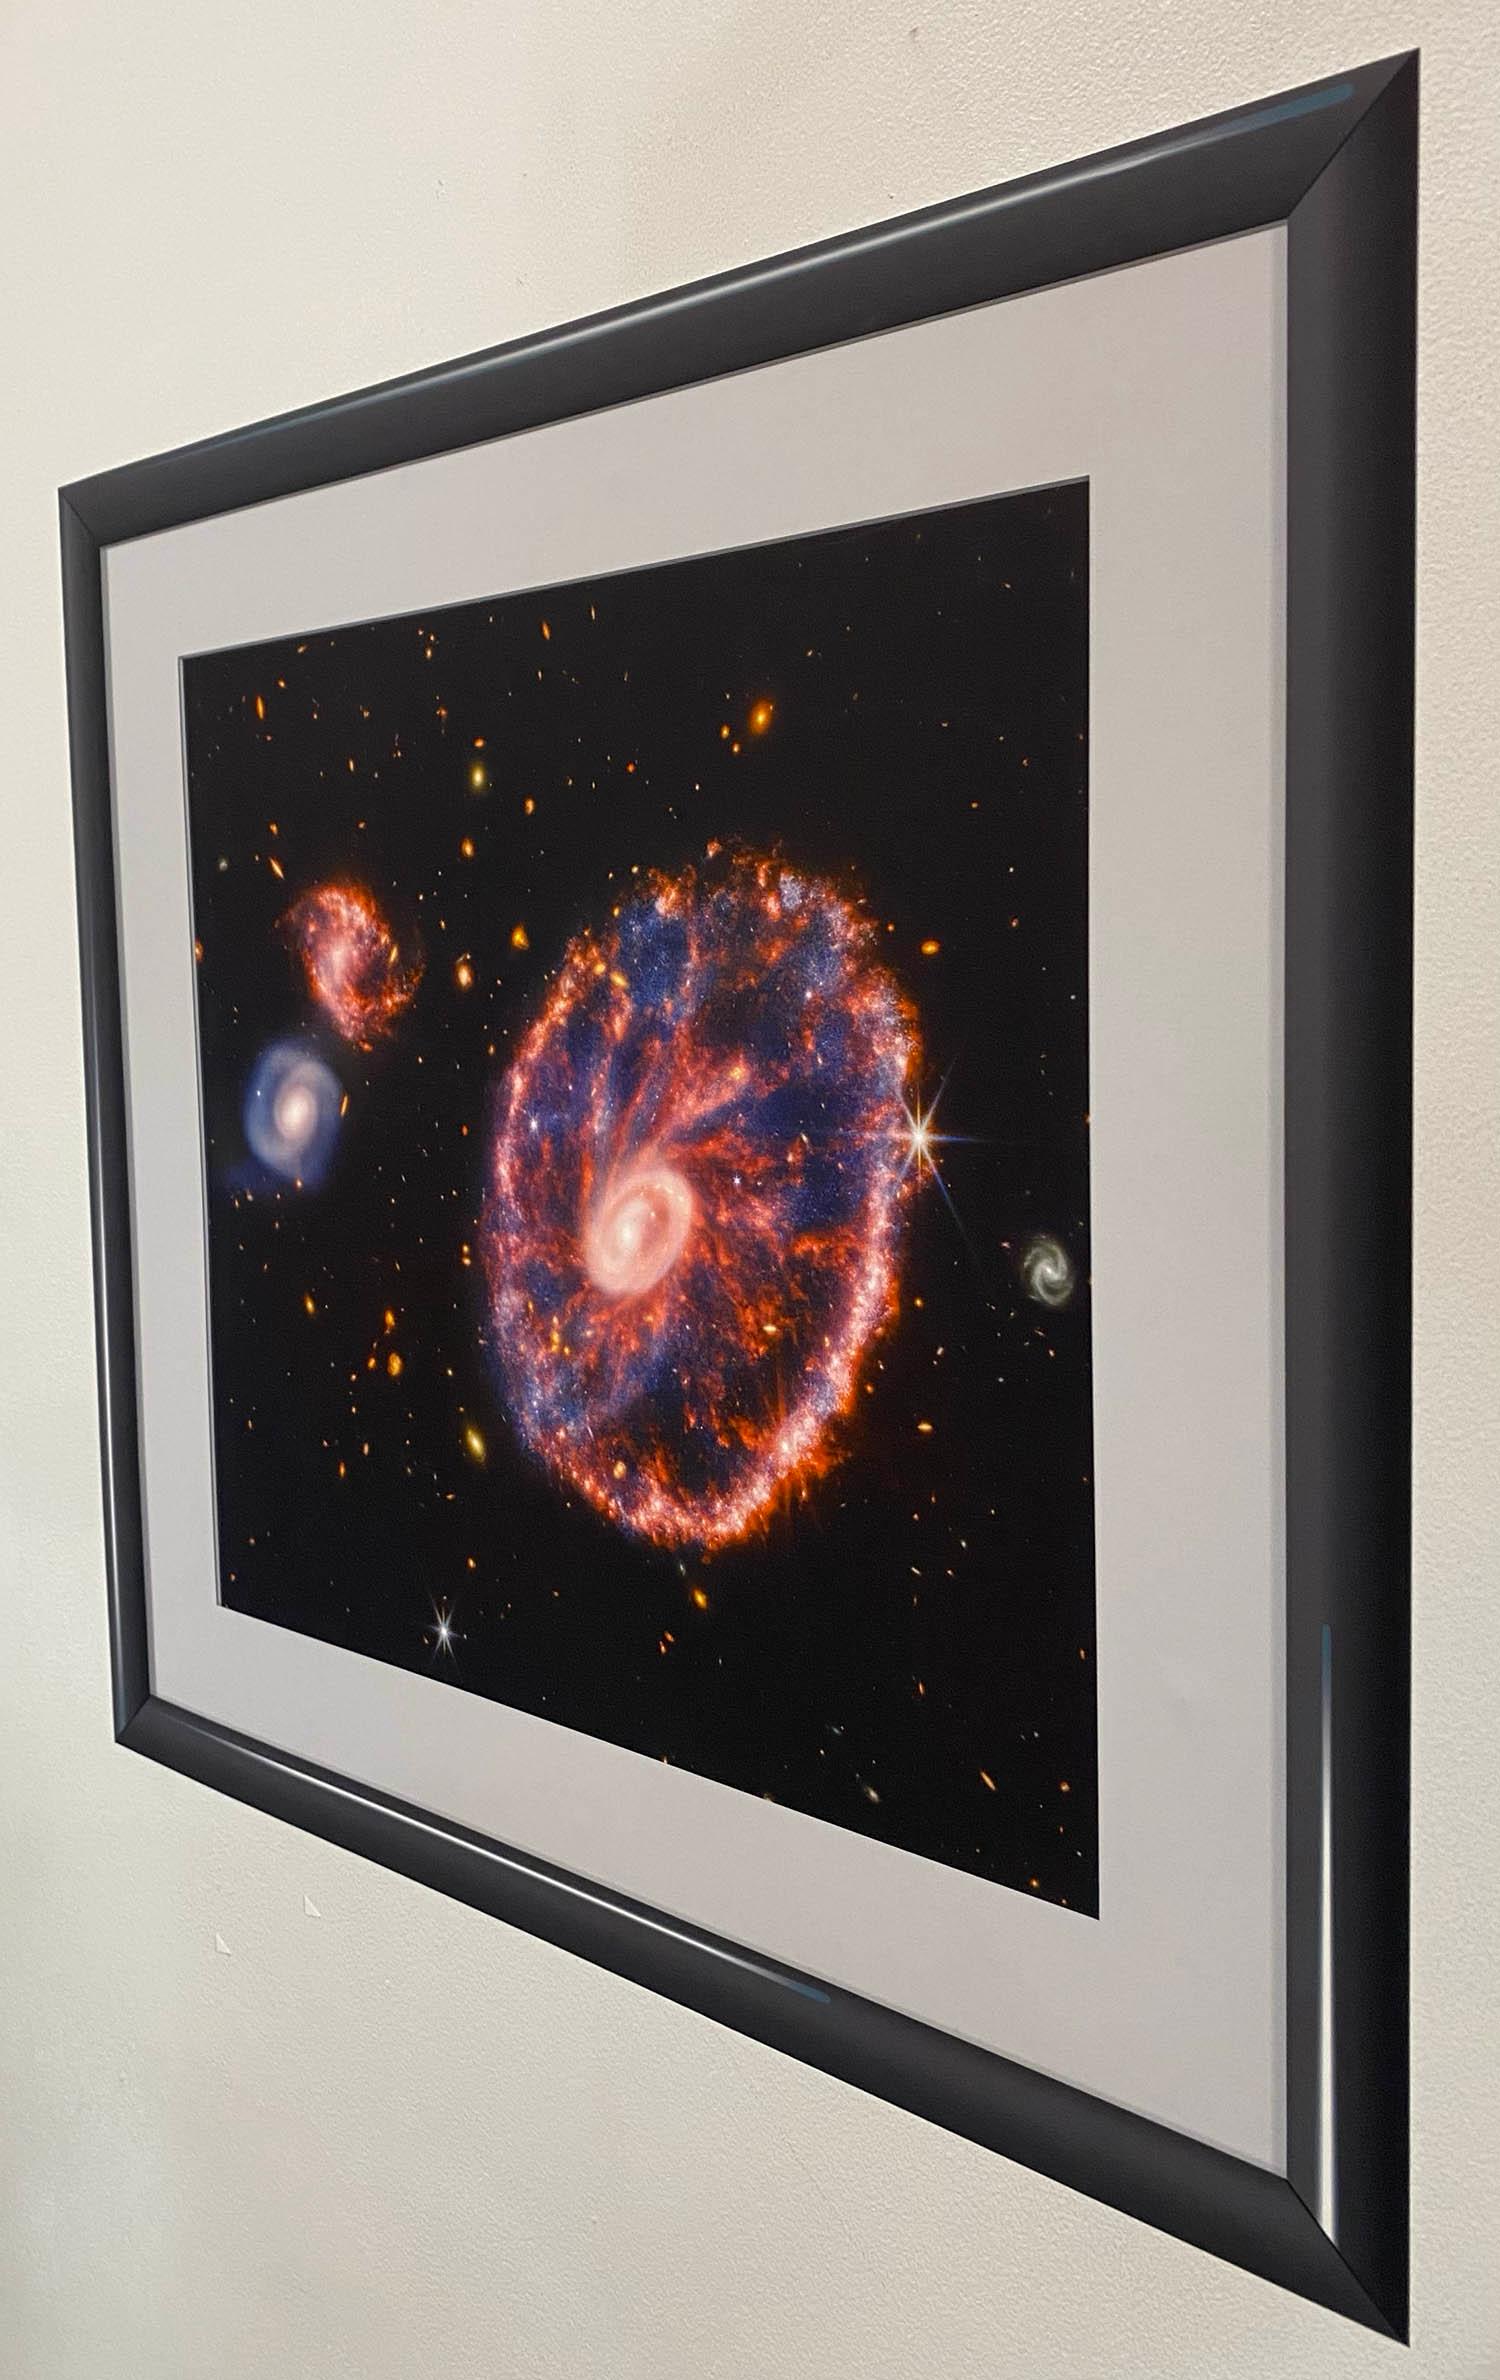 Cosmic Cliffs” in the Carina Nebula (NIRCam Image) Printed Fine Art Print